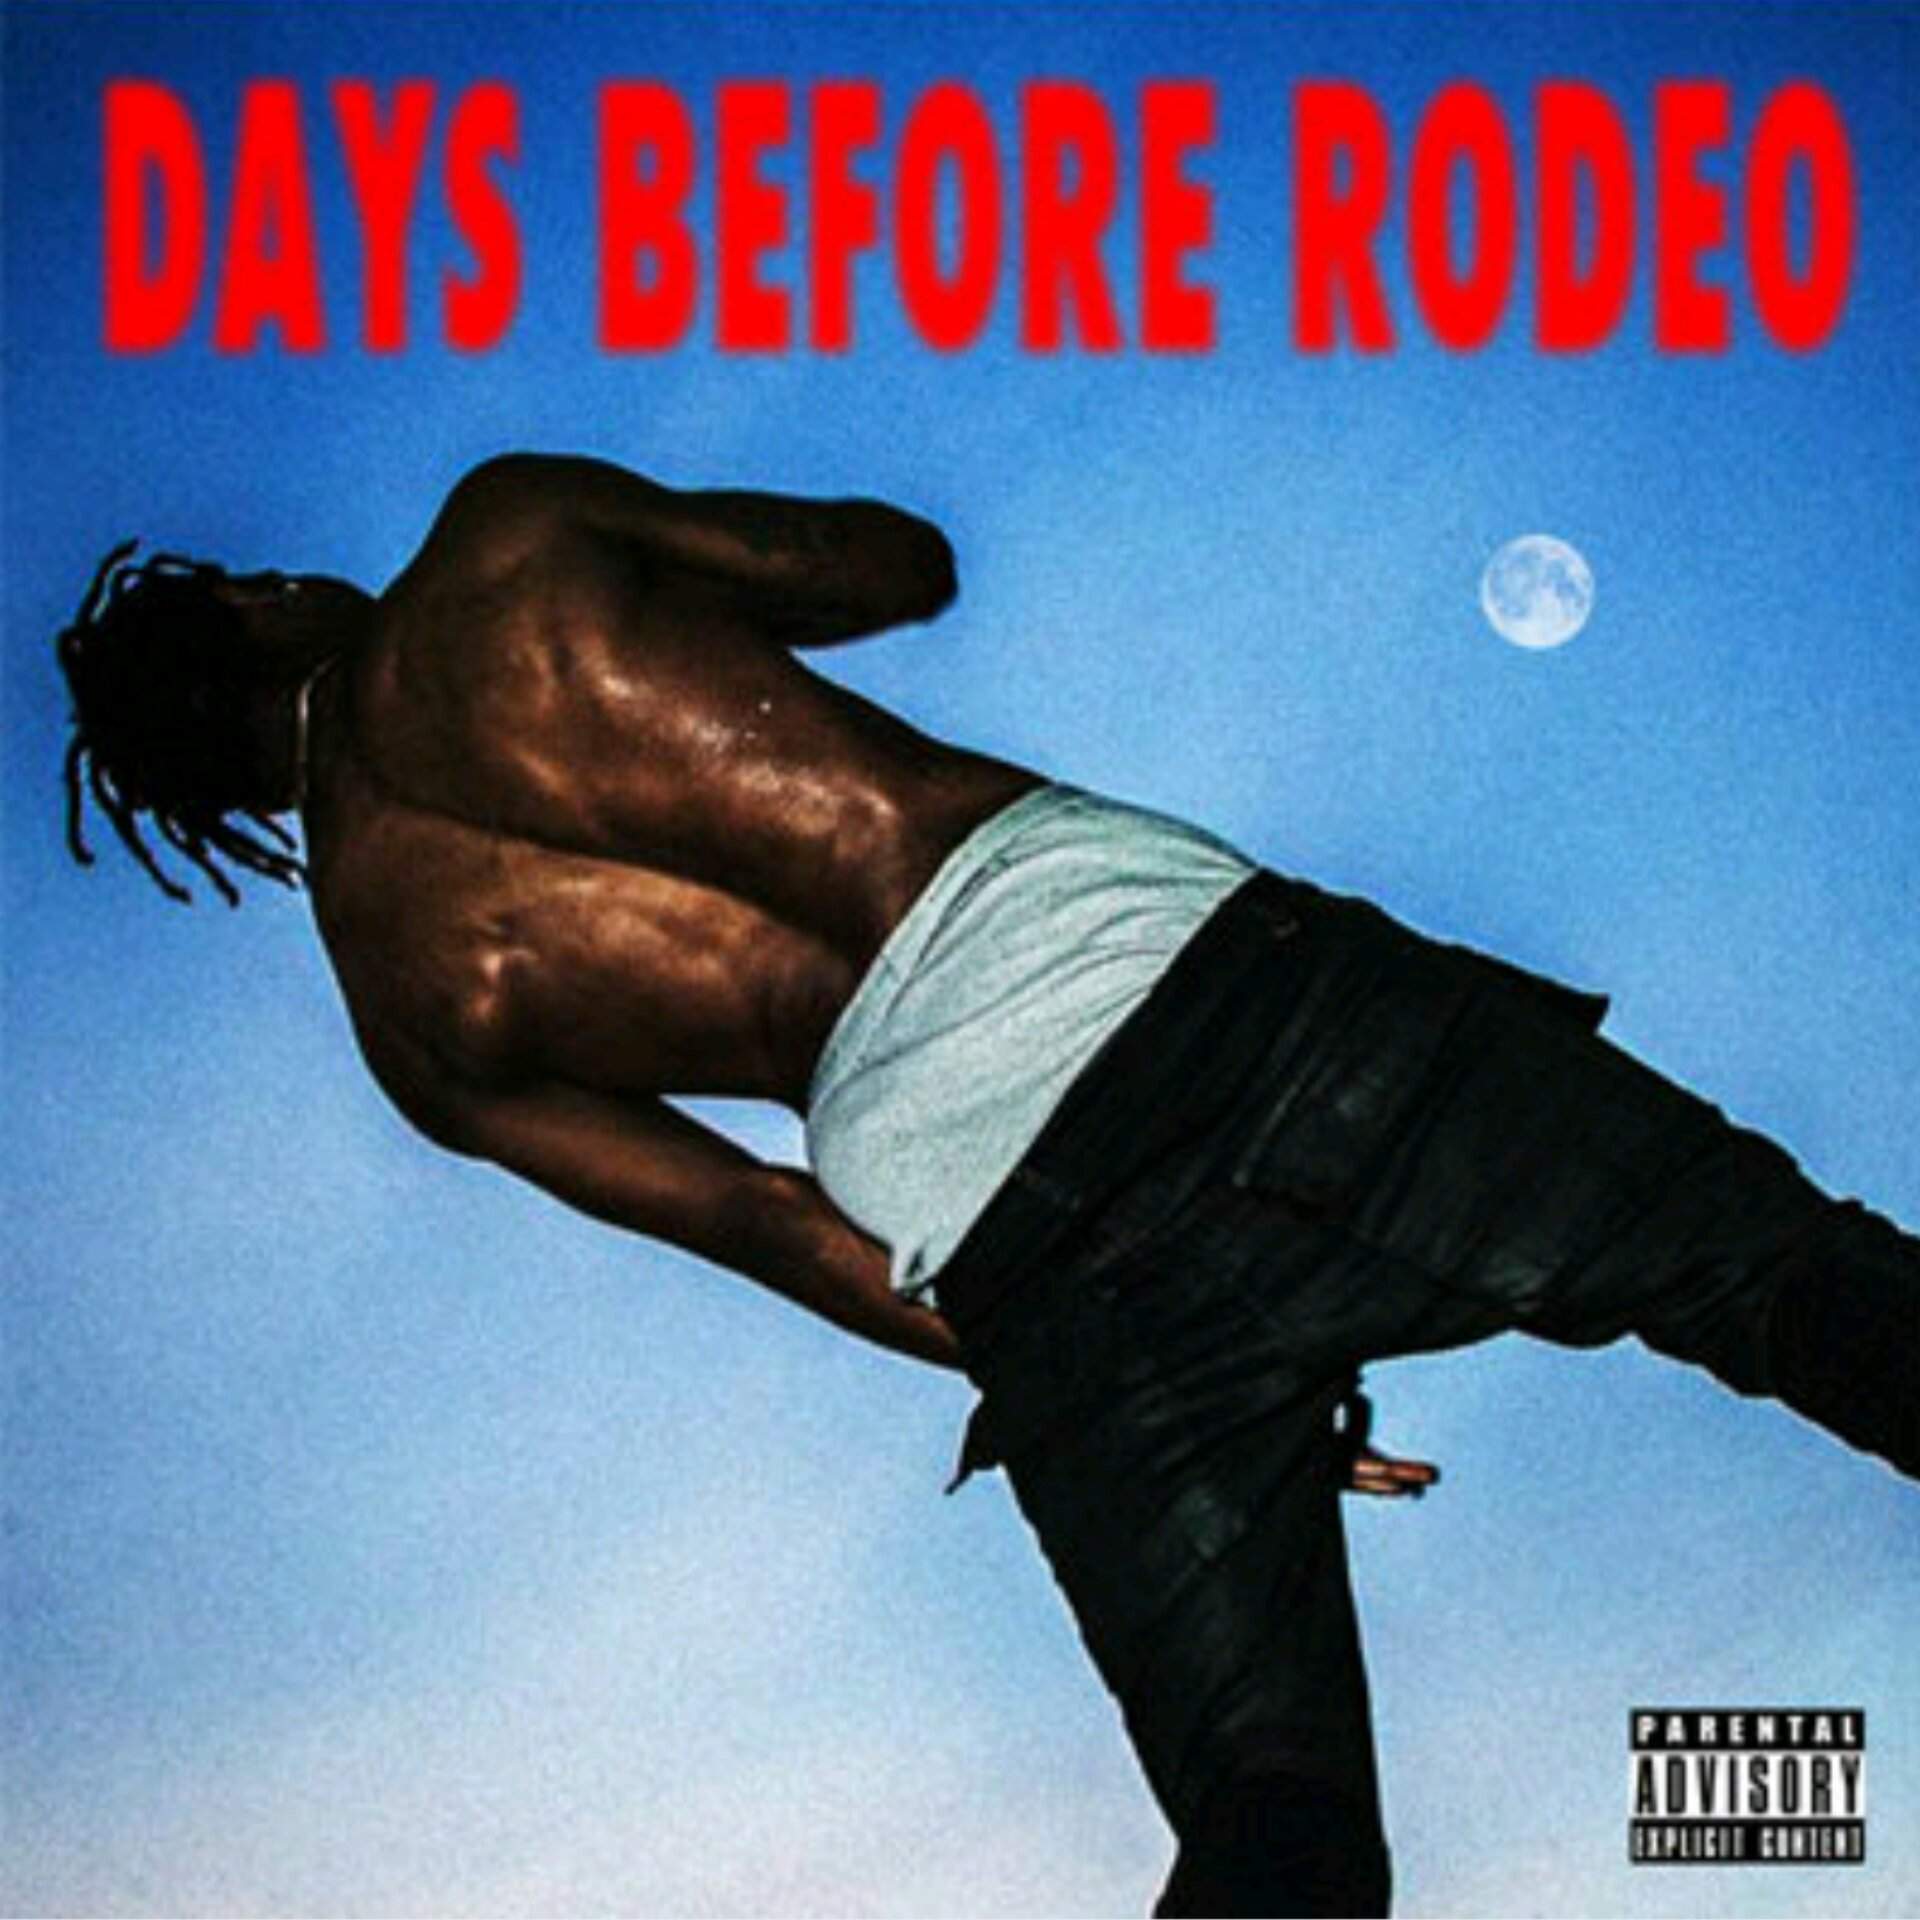 Travi Scott Days Before Rodeo Album Review Rap Hip Hop Amino